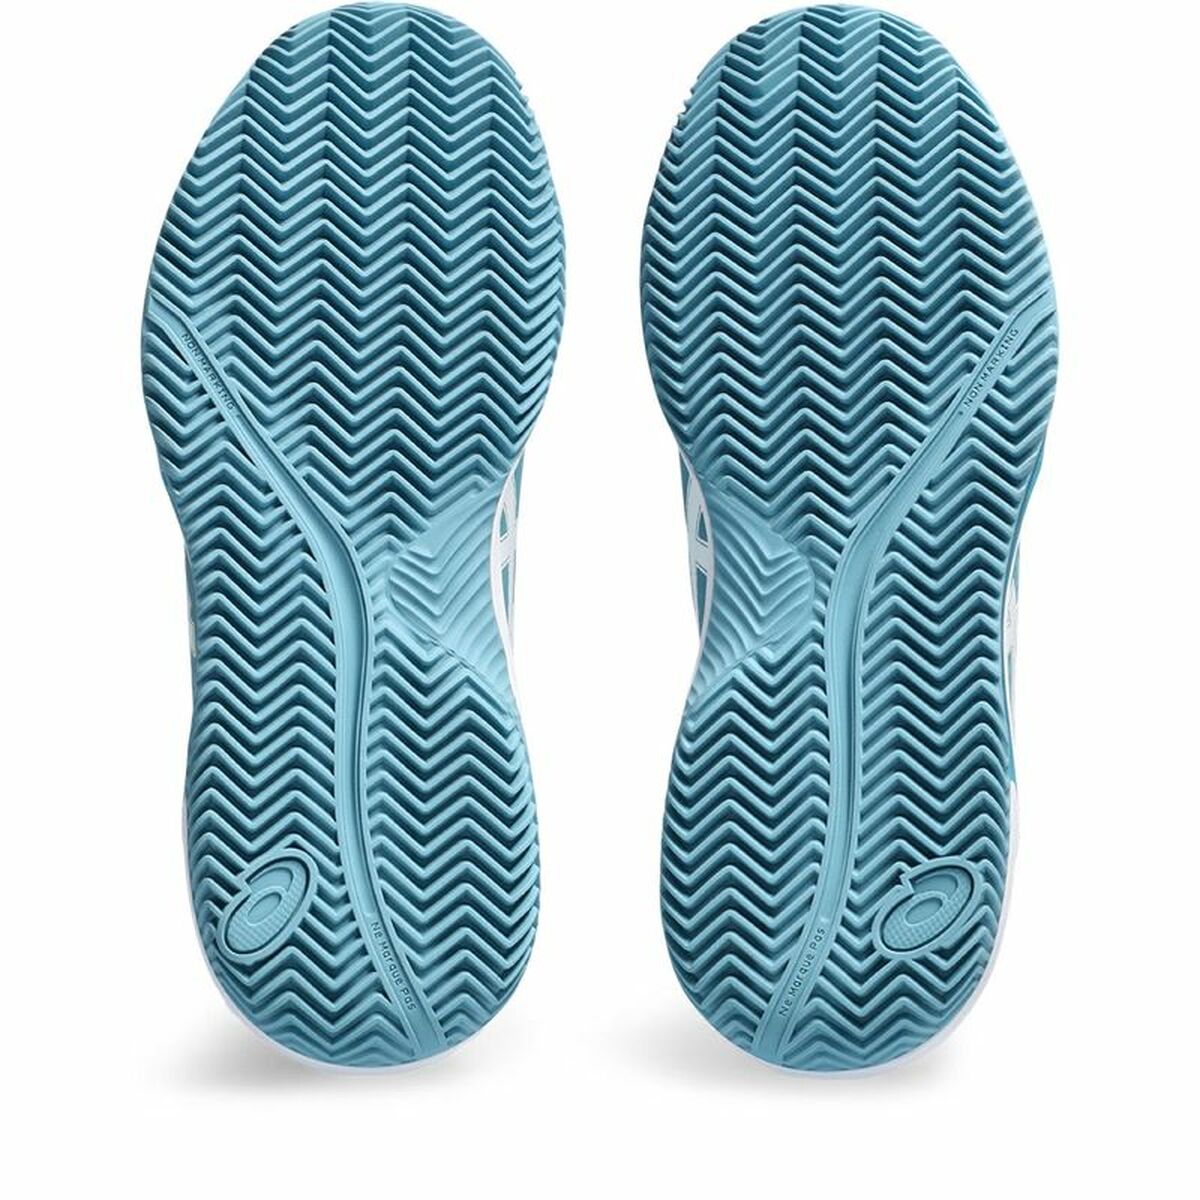 Chaussures de Tennis pour Femmes Asics Gel-Dedicate 8 Clay Bleu clair